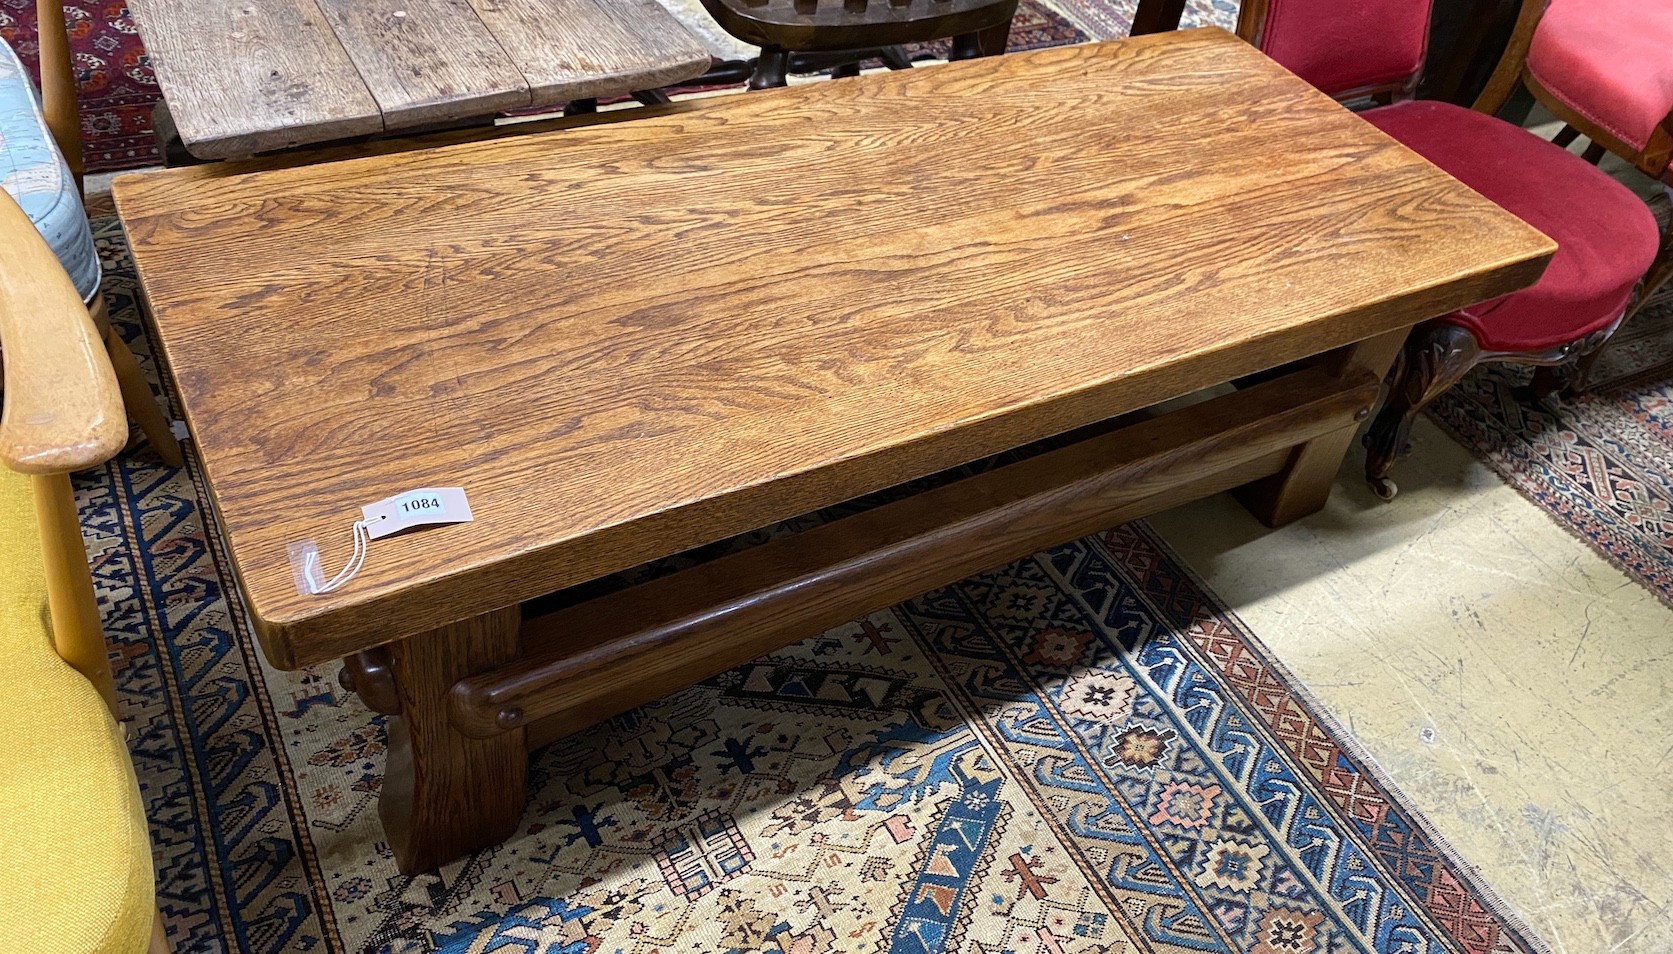 A French Brutalist oak coffee table, width 137cm, depth 57cm, height 46cm